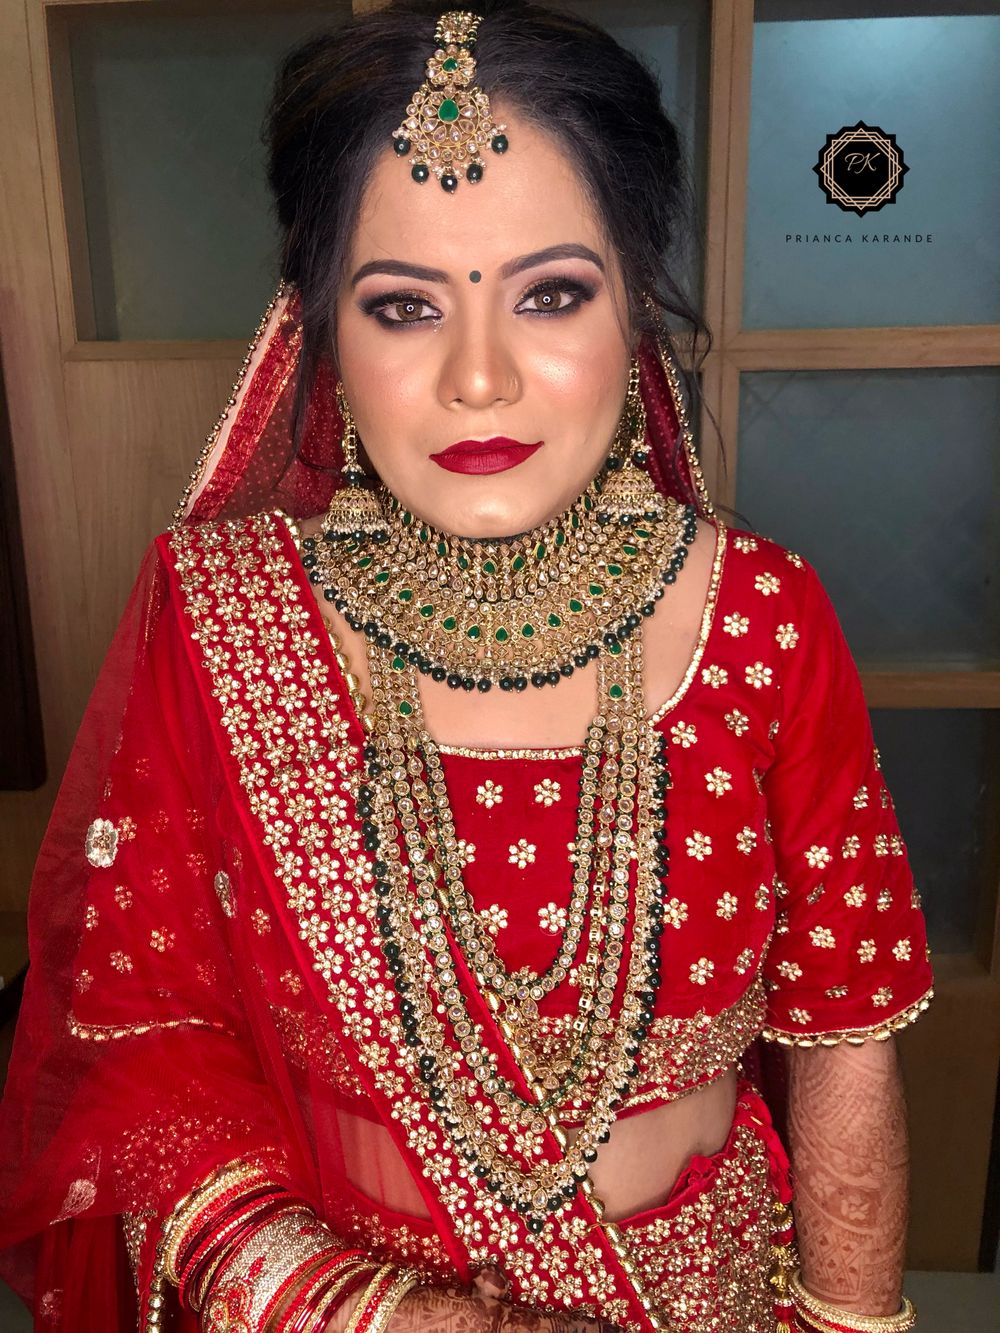 Photo From Bilaspur Bride - By Prianca Karande MUA